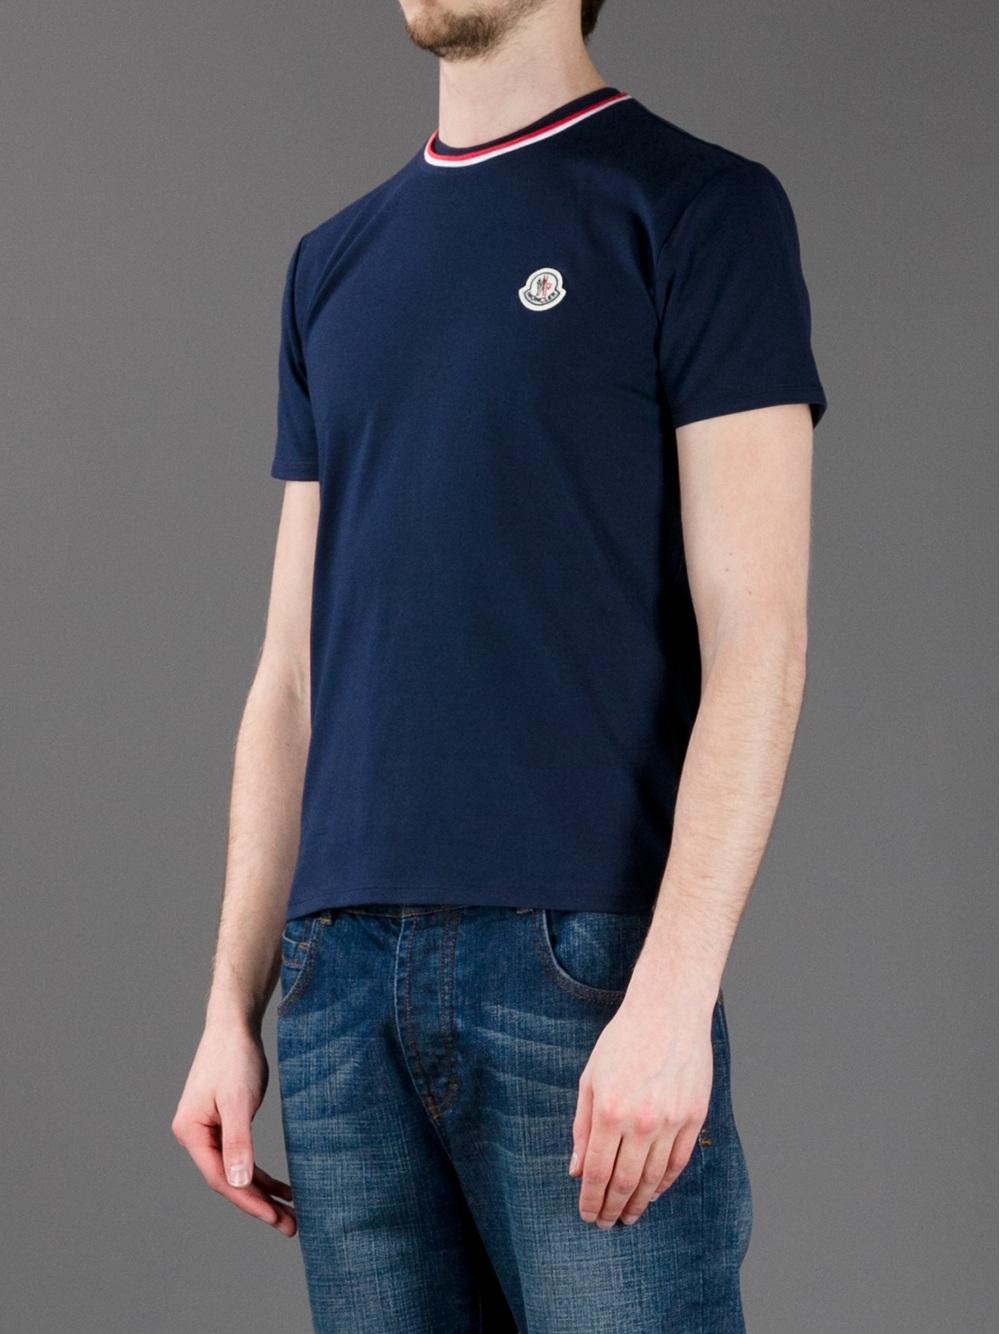 Moncler Crew Neck T-shirt in Blue for Men - Lyst